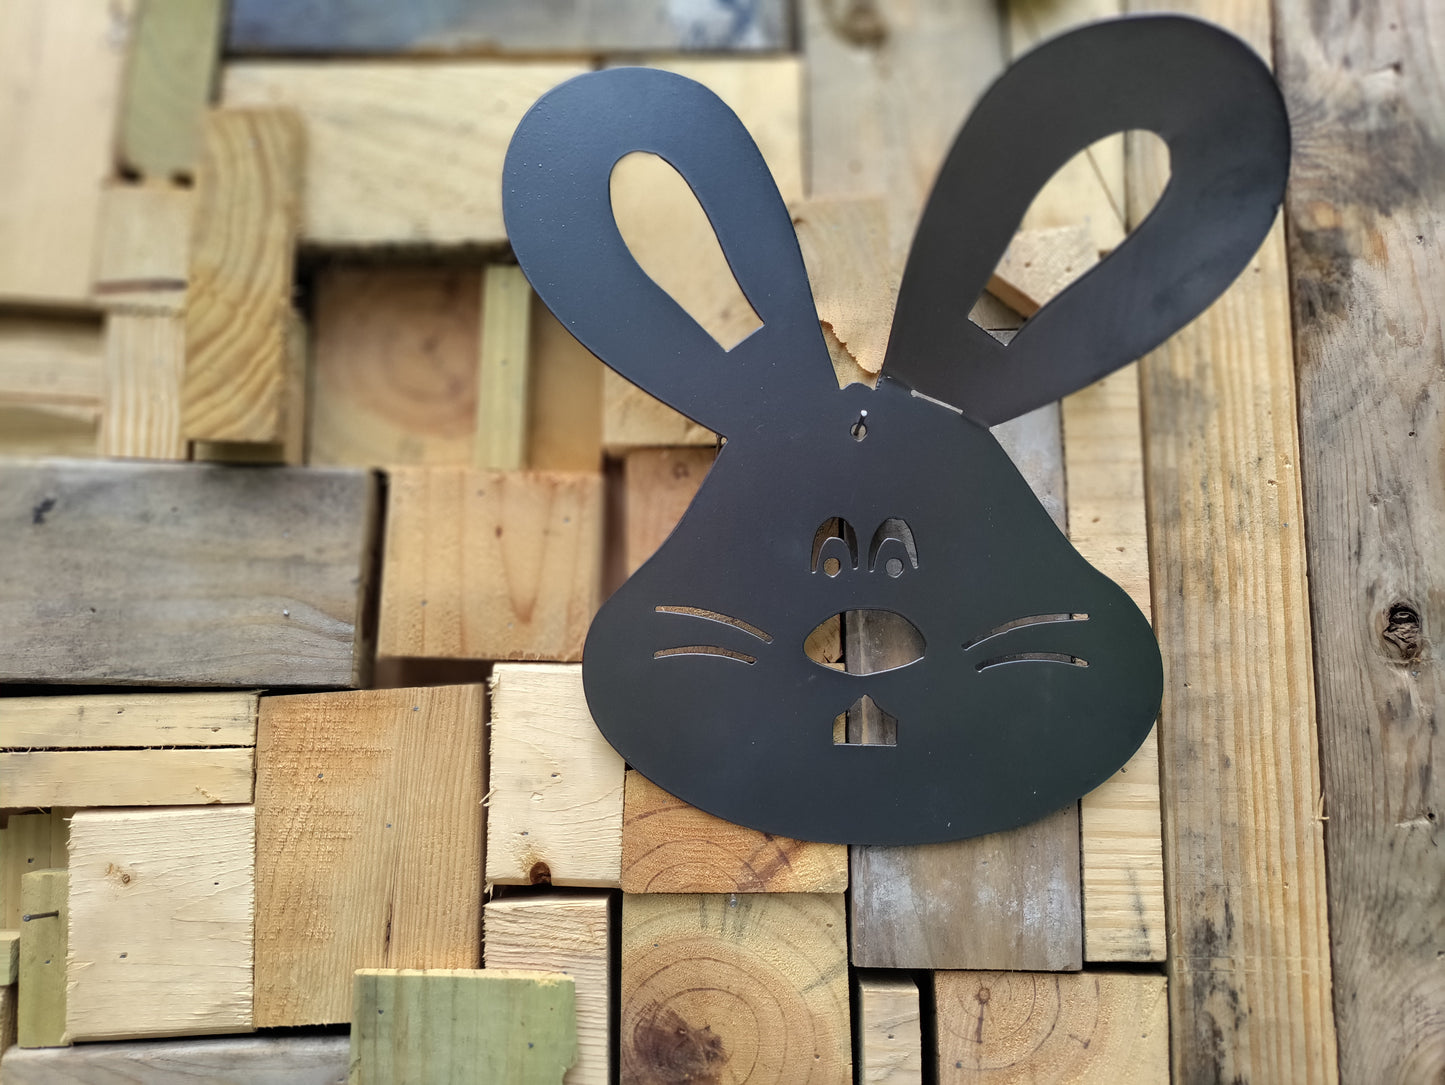 Bunny with 3D Ear - Cutting Edge Design LLC